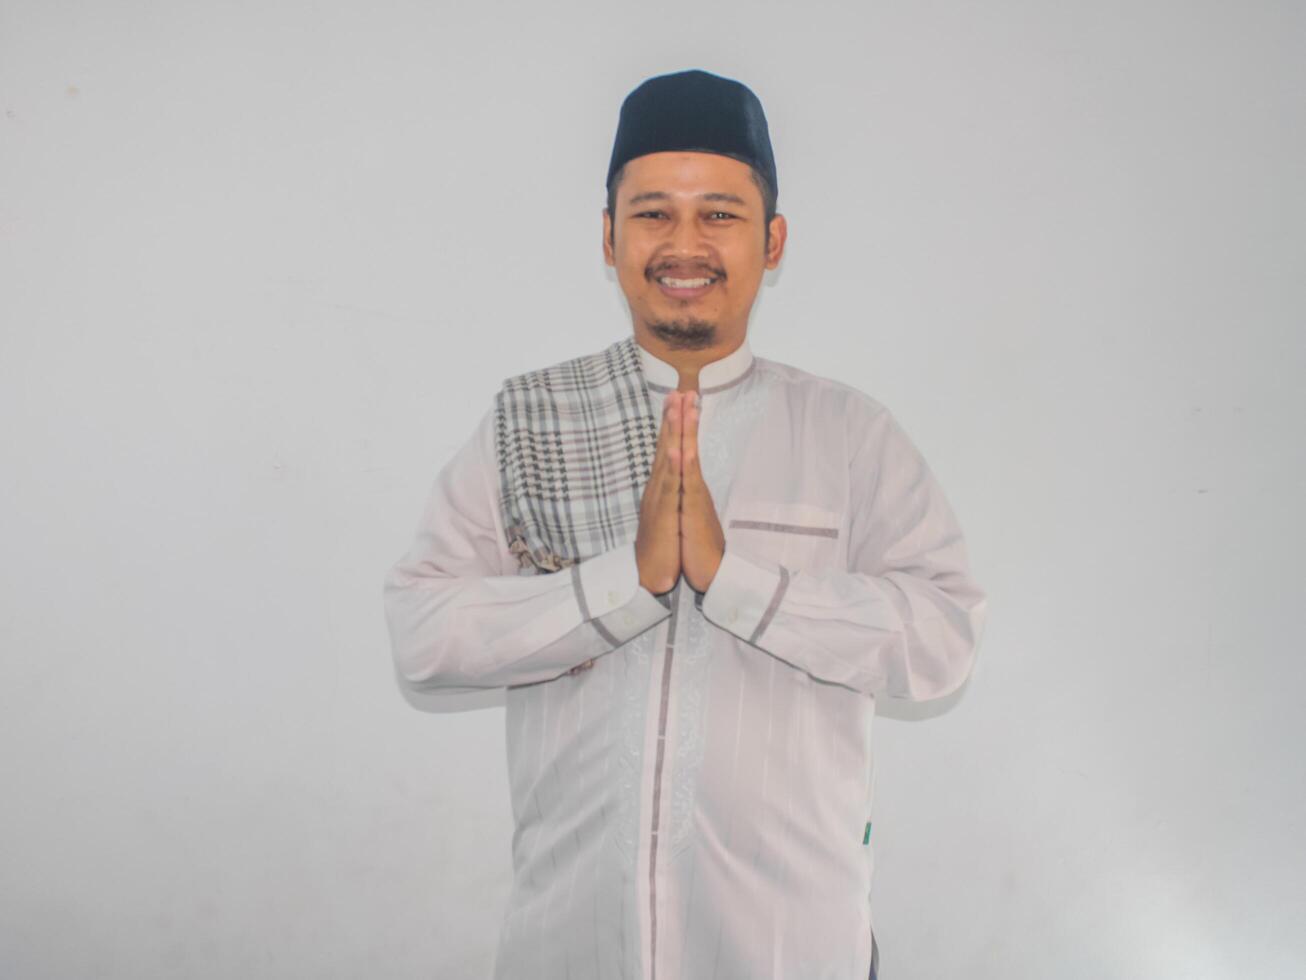 Moslem Asian man smiling to give greeting during Ramadan celebration photo